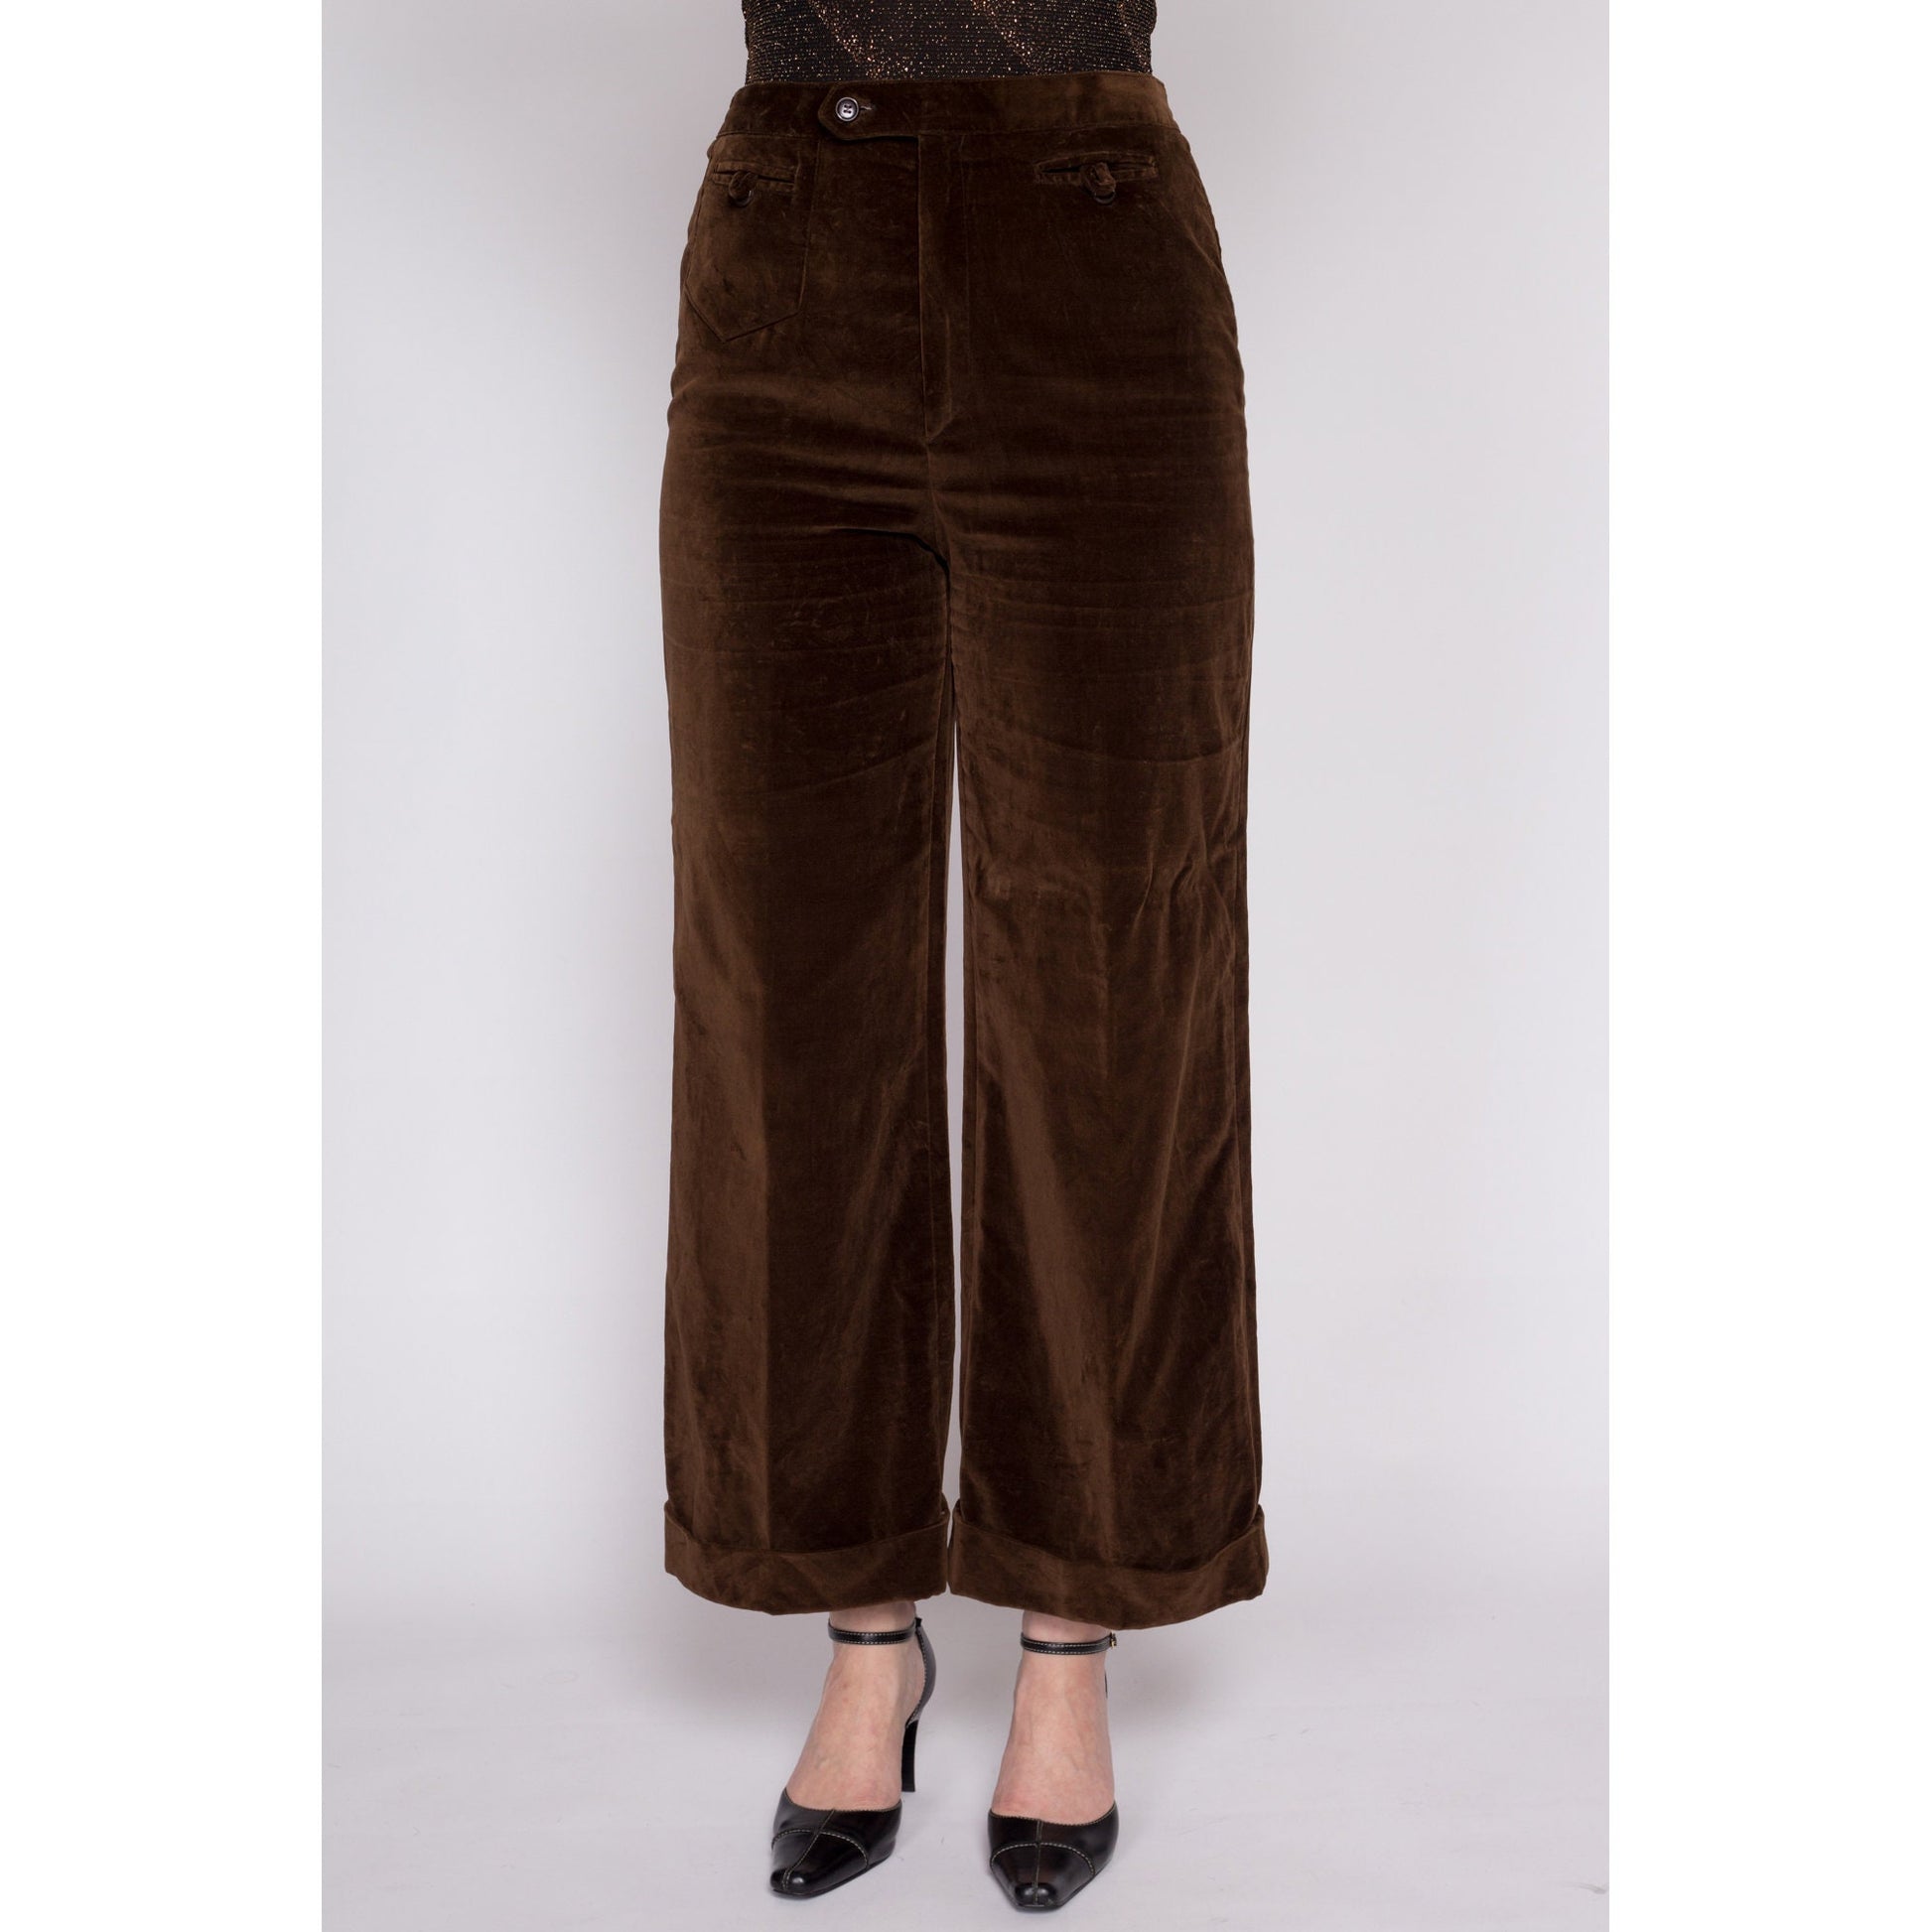 M| 70s Chocolate Brown Velvet Pants - Medium, 28" | Vintage High Waisted Wide Leg Cuffed Trousers